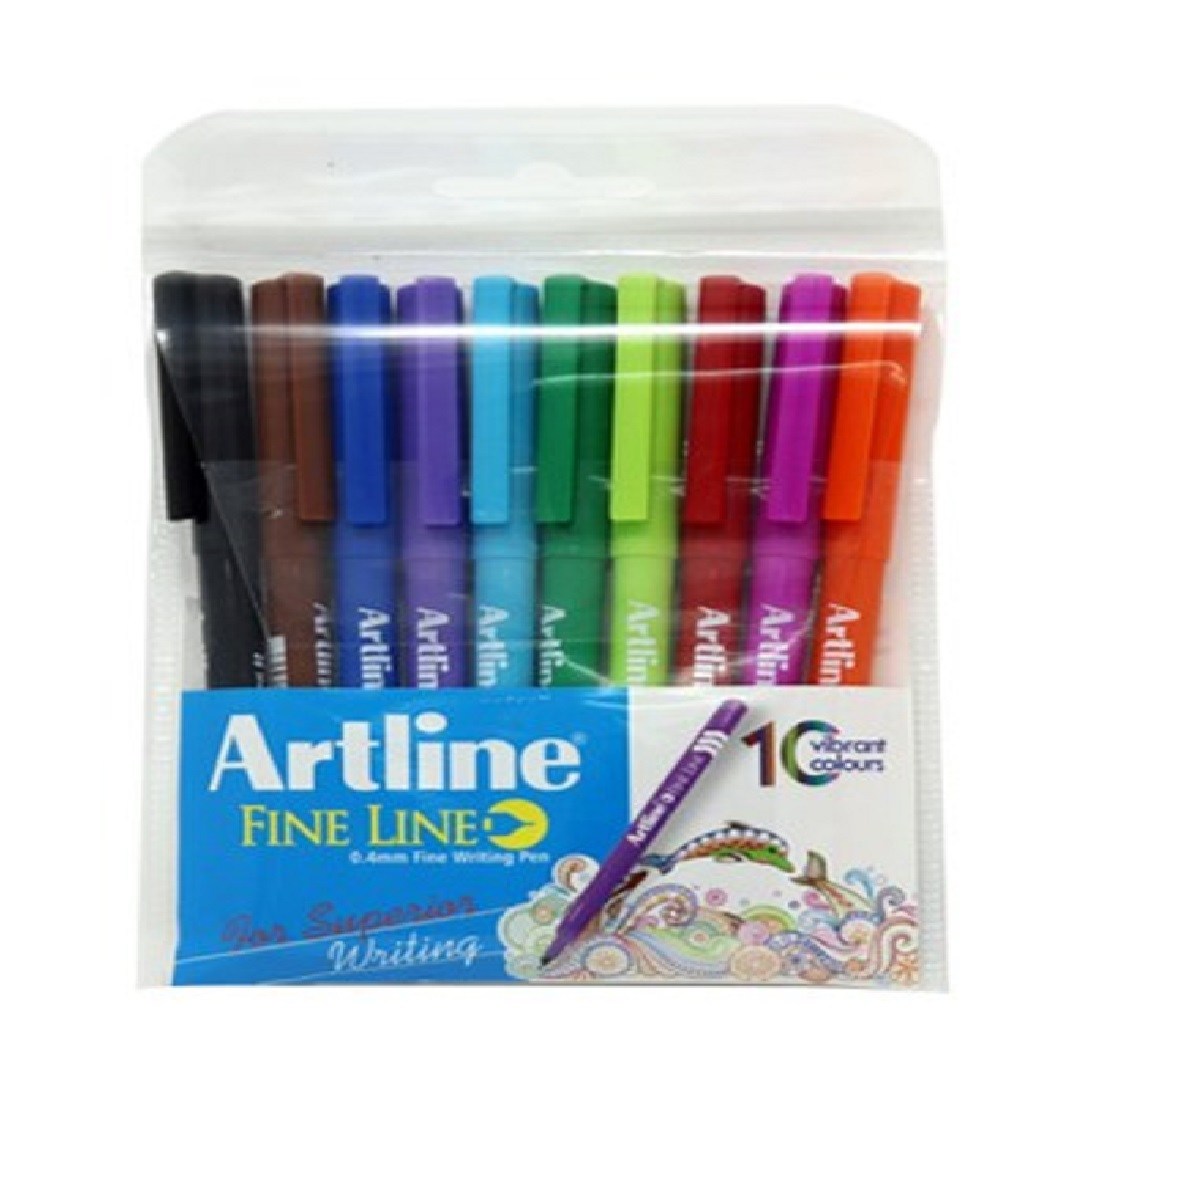 Artline Fine Line 0.4mm Fine Writing Pen Pink